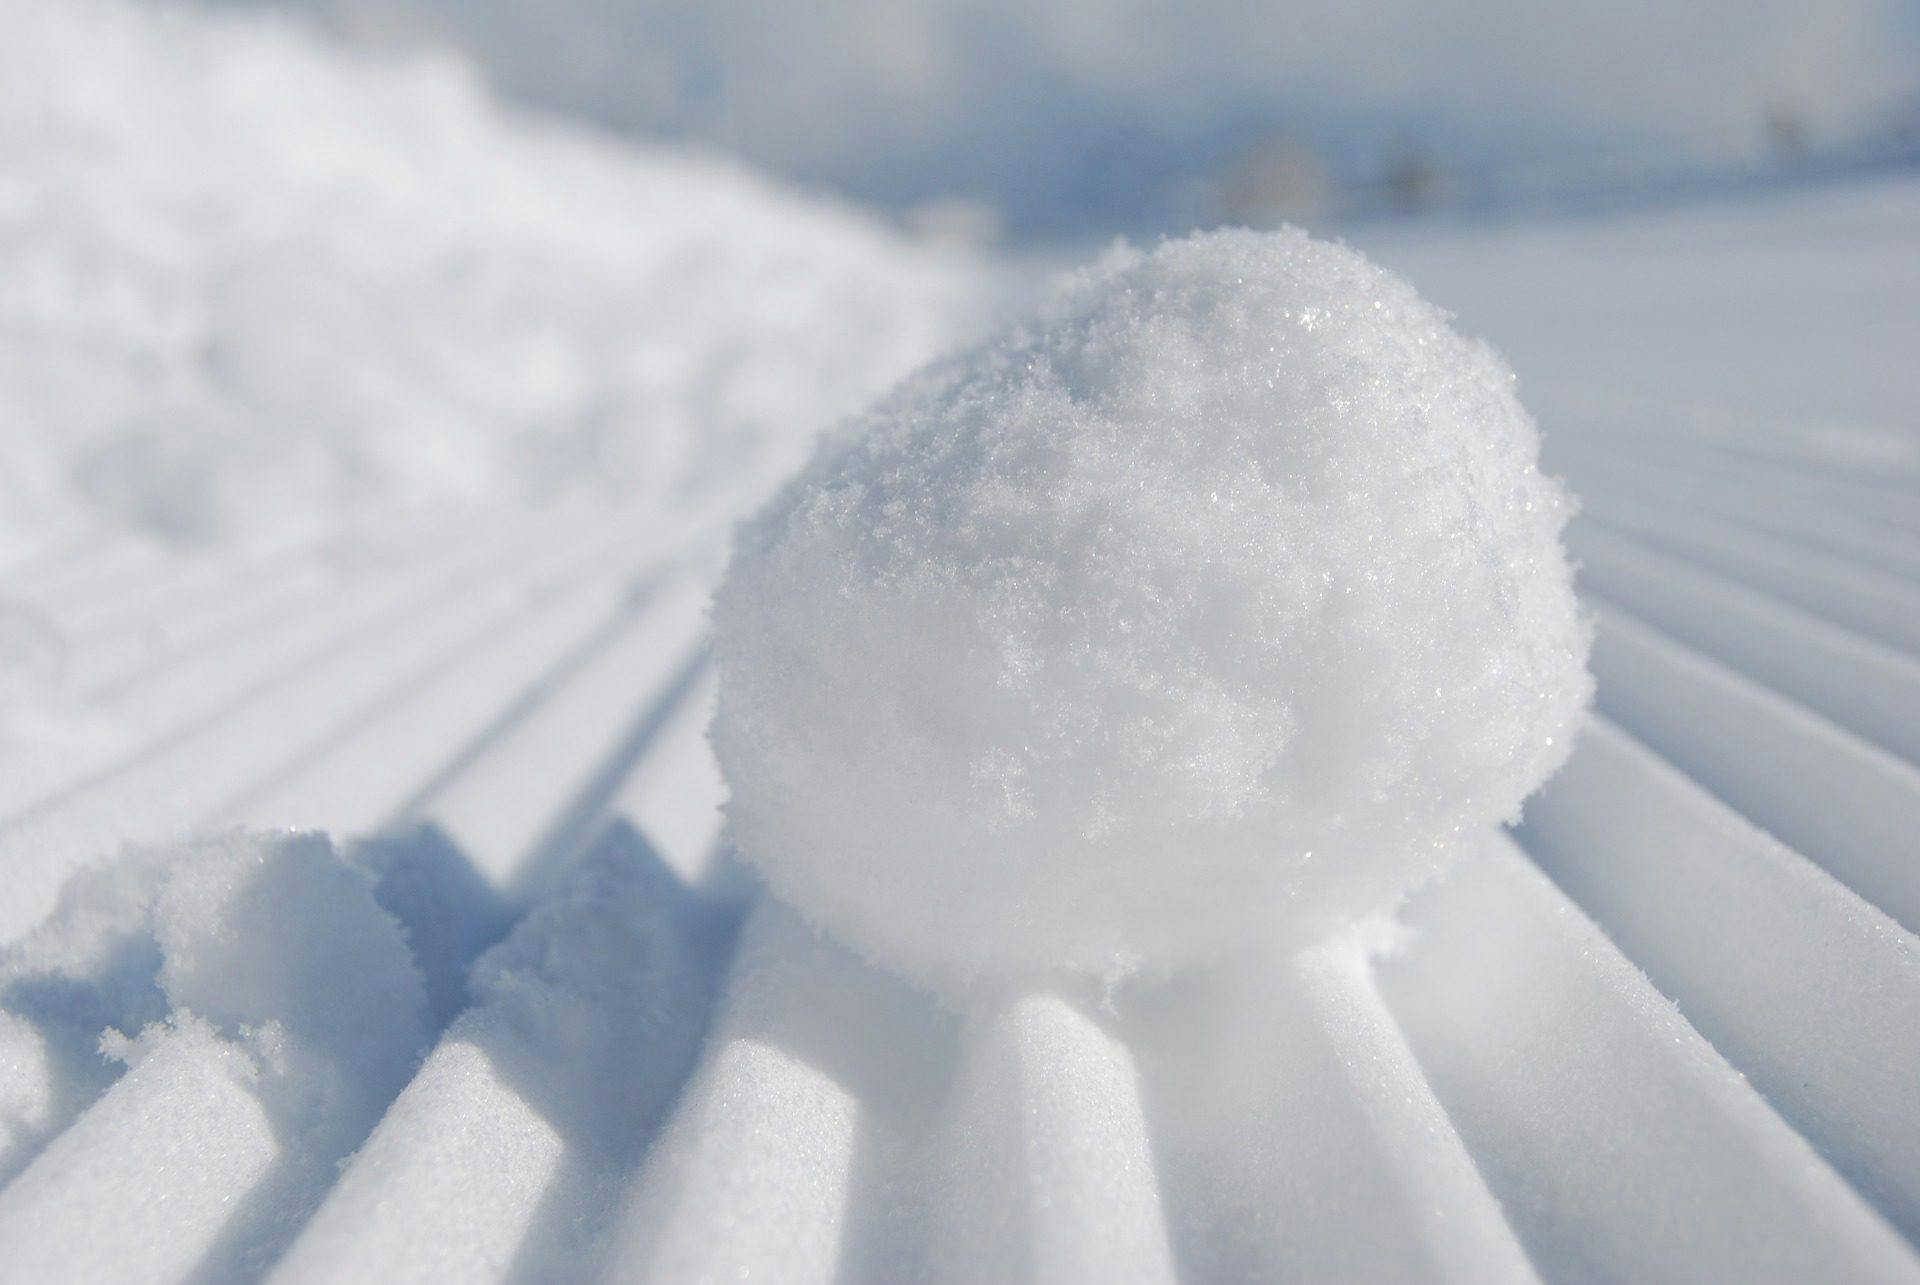 a snowball on a snowboard